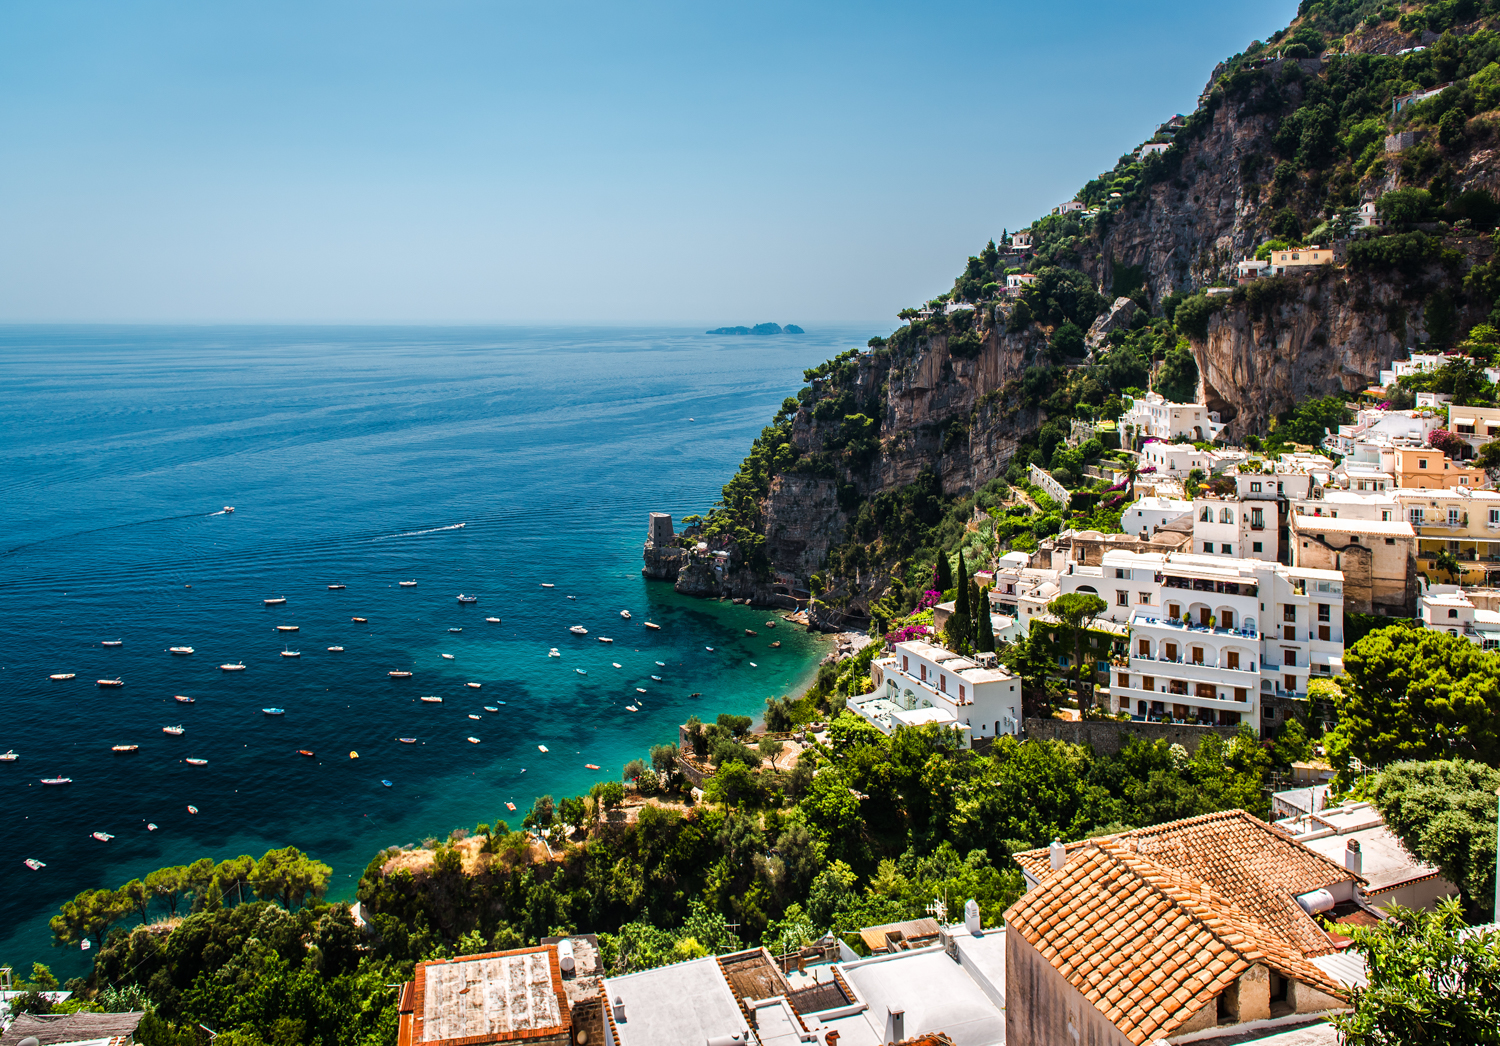 Positano on the Amalfi Coast. Image by Alex Tihonov / Moment / Getty